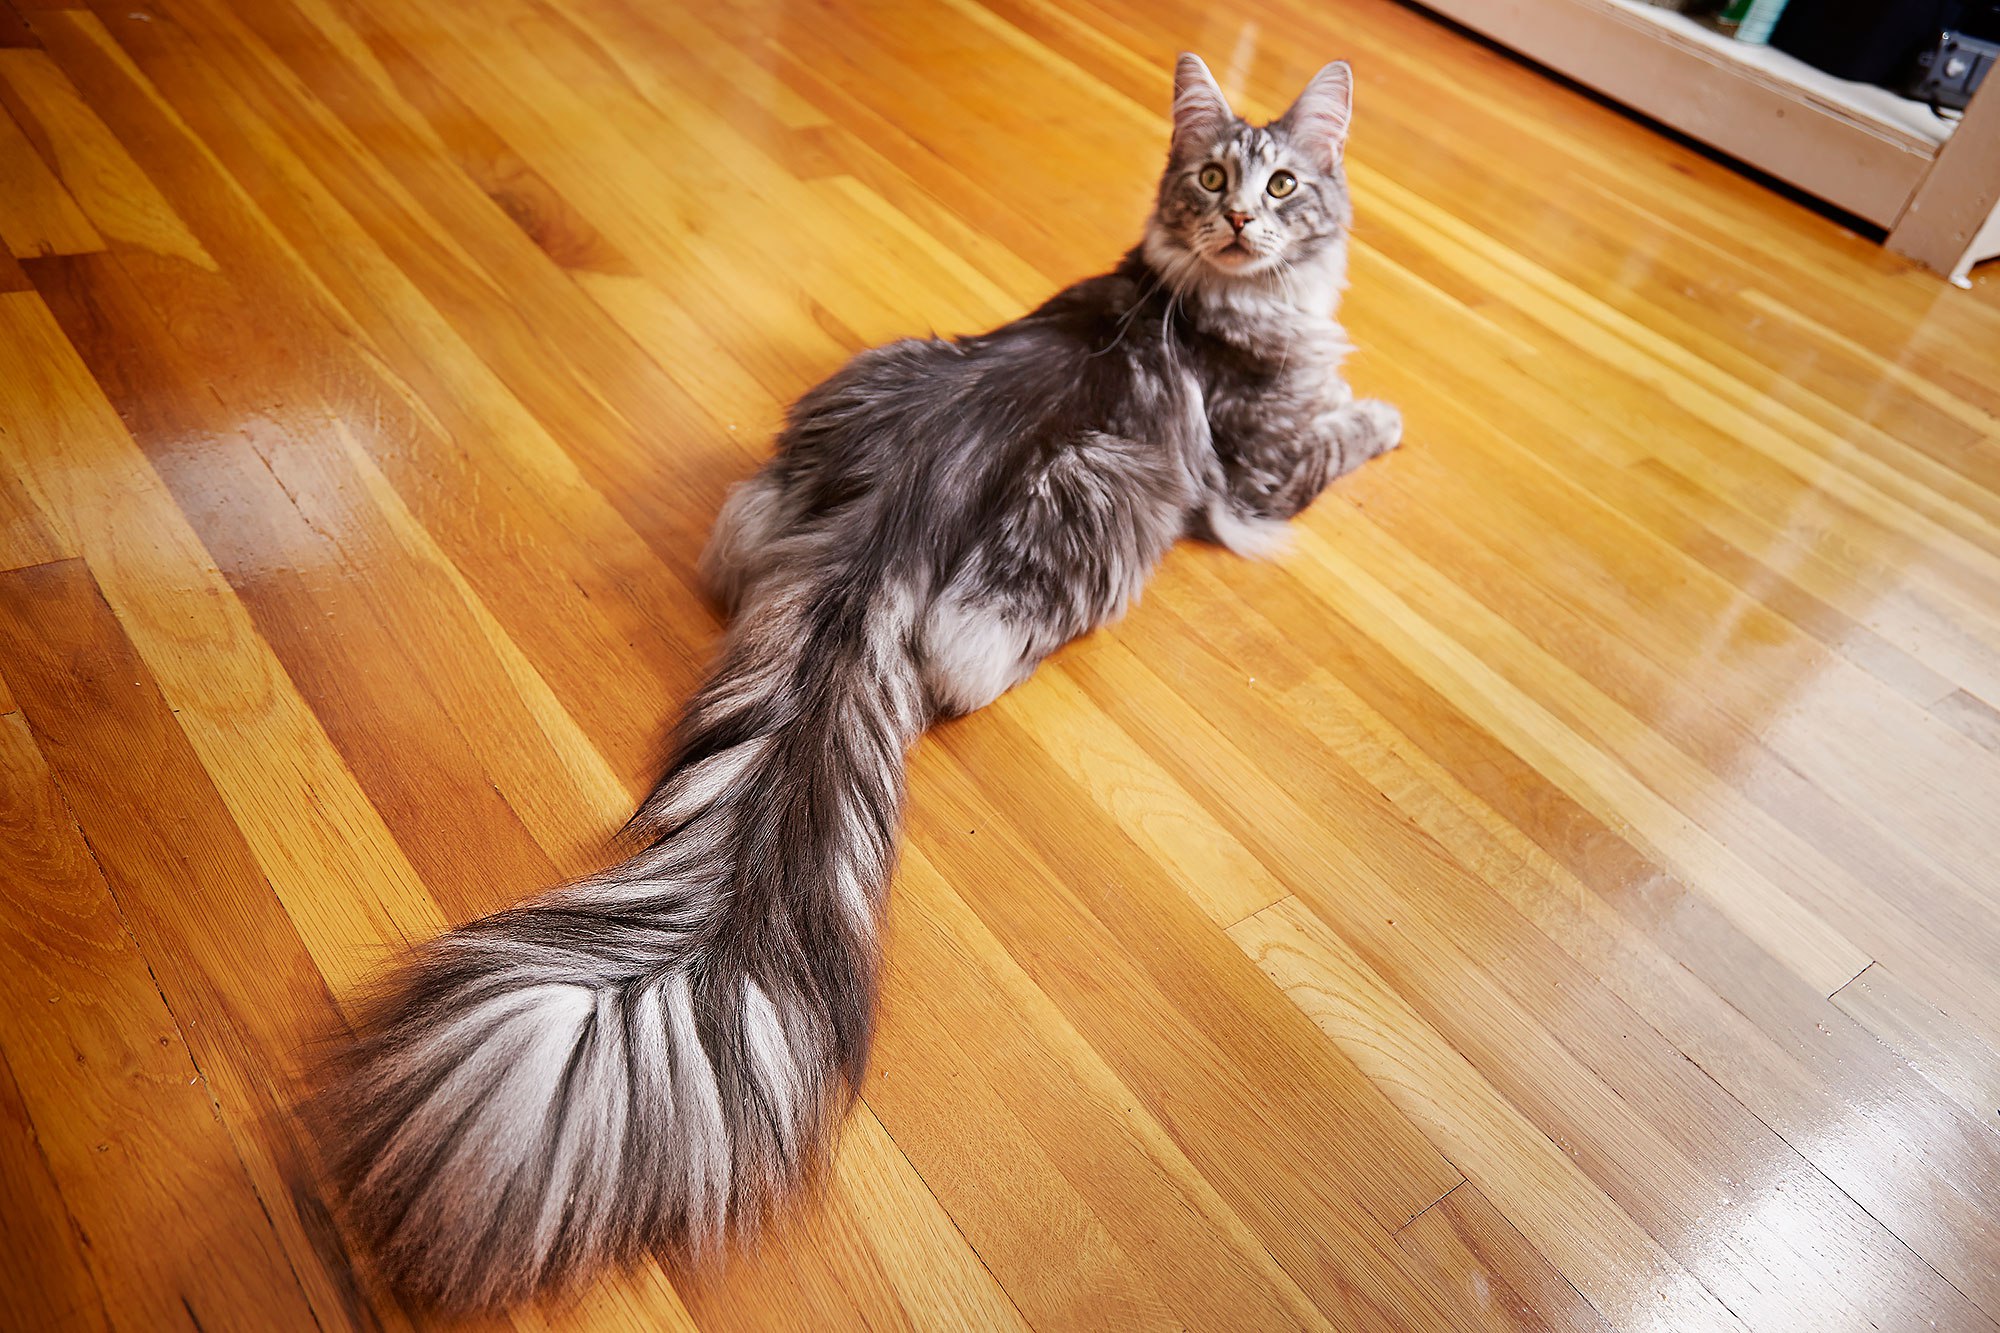 World's Longest Cat Tail Guinness World Record Holder | PEOPLE.com